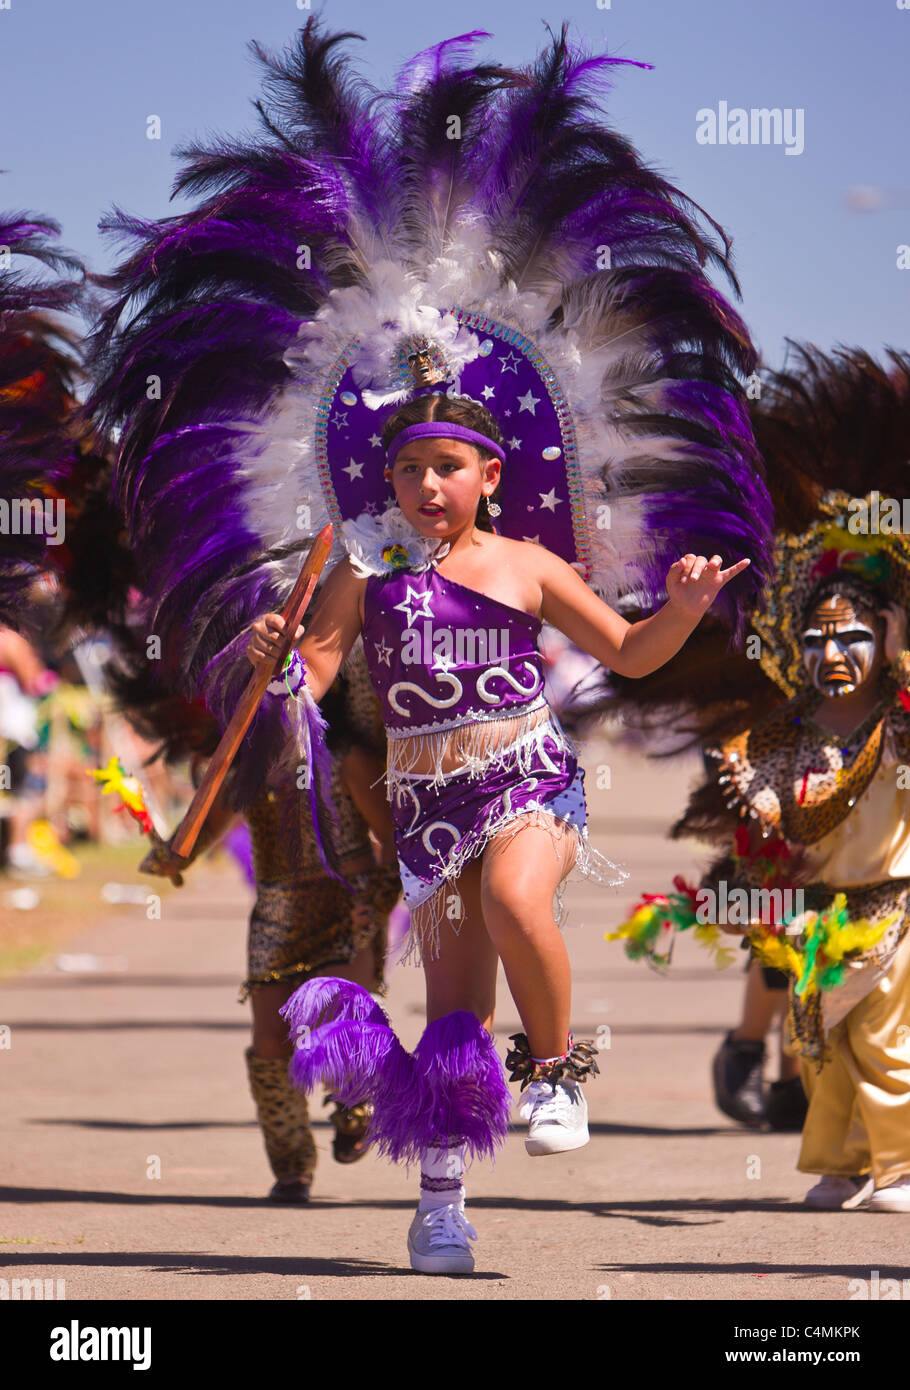 MANASSAS, VIRGINIA, USA - Children during Bolivian folklife festival parade with dancers in costume. Stock Photo